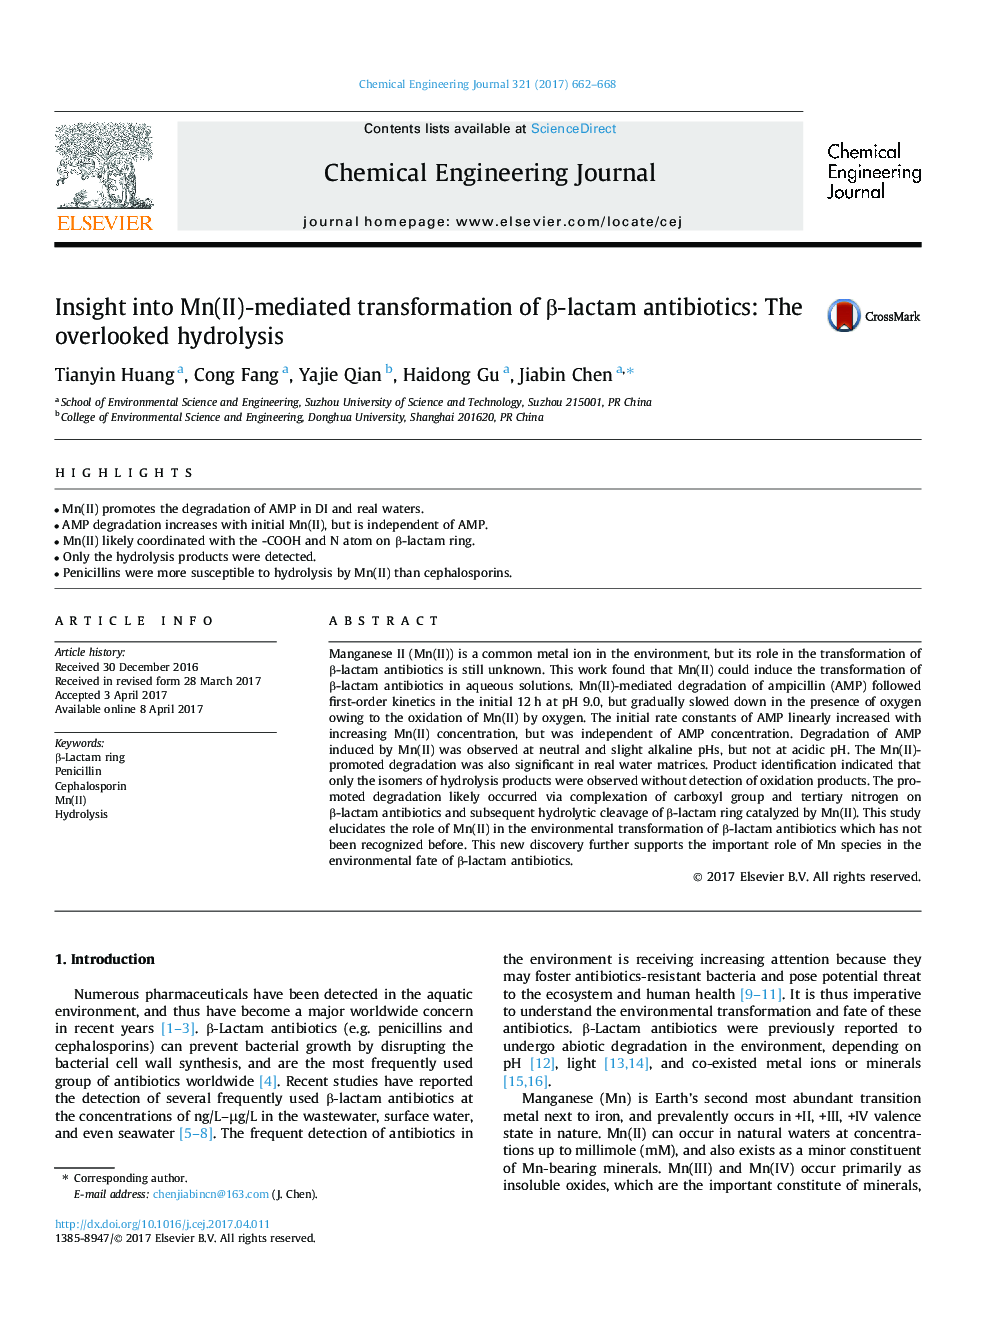 Insight into Mn(II)-mediated transformation of Î²-lactam antibiotics: The overlooked hydrolysis